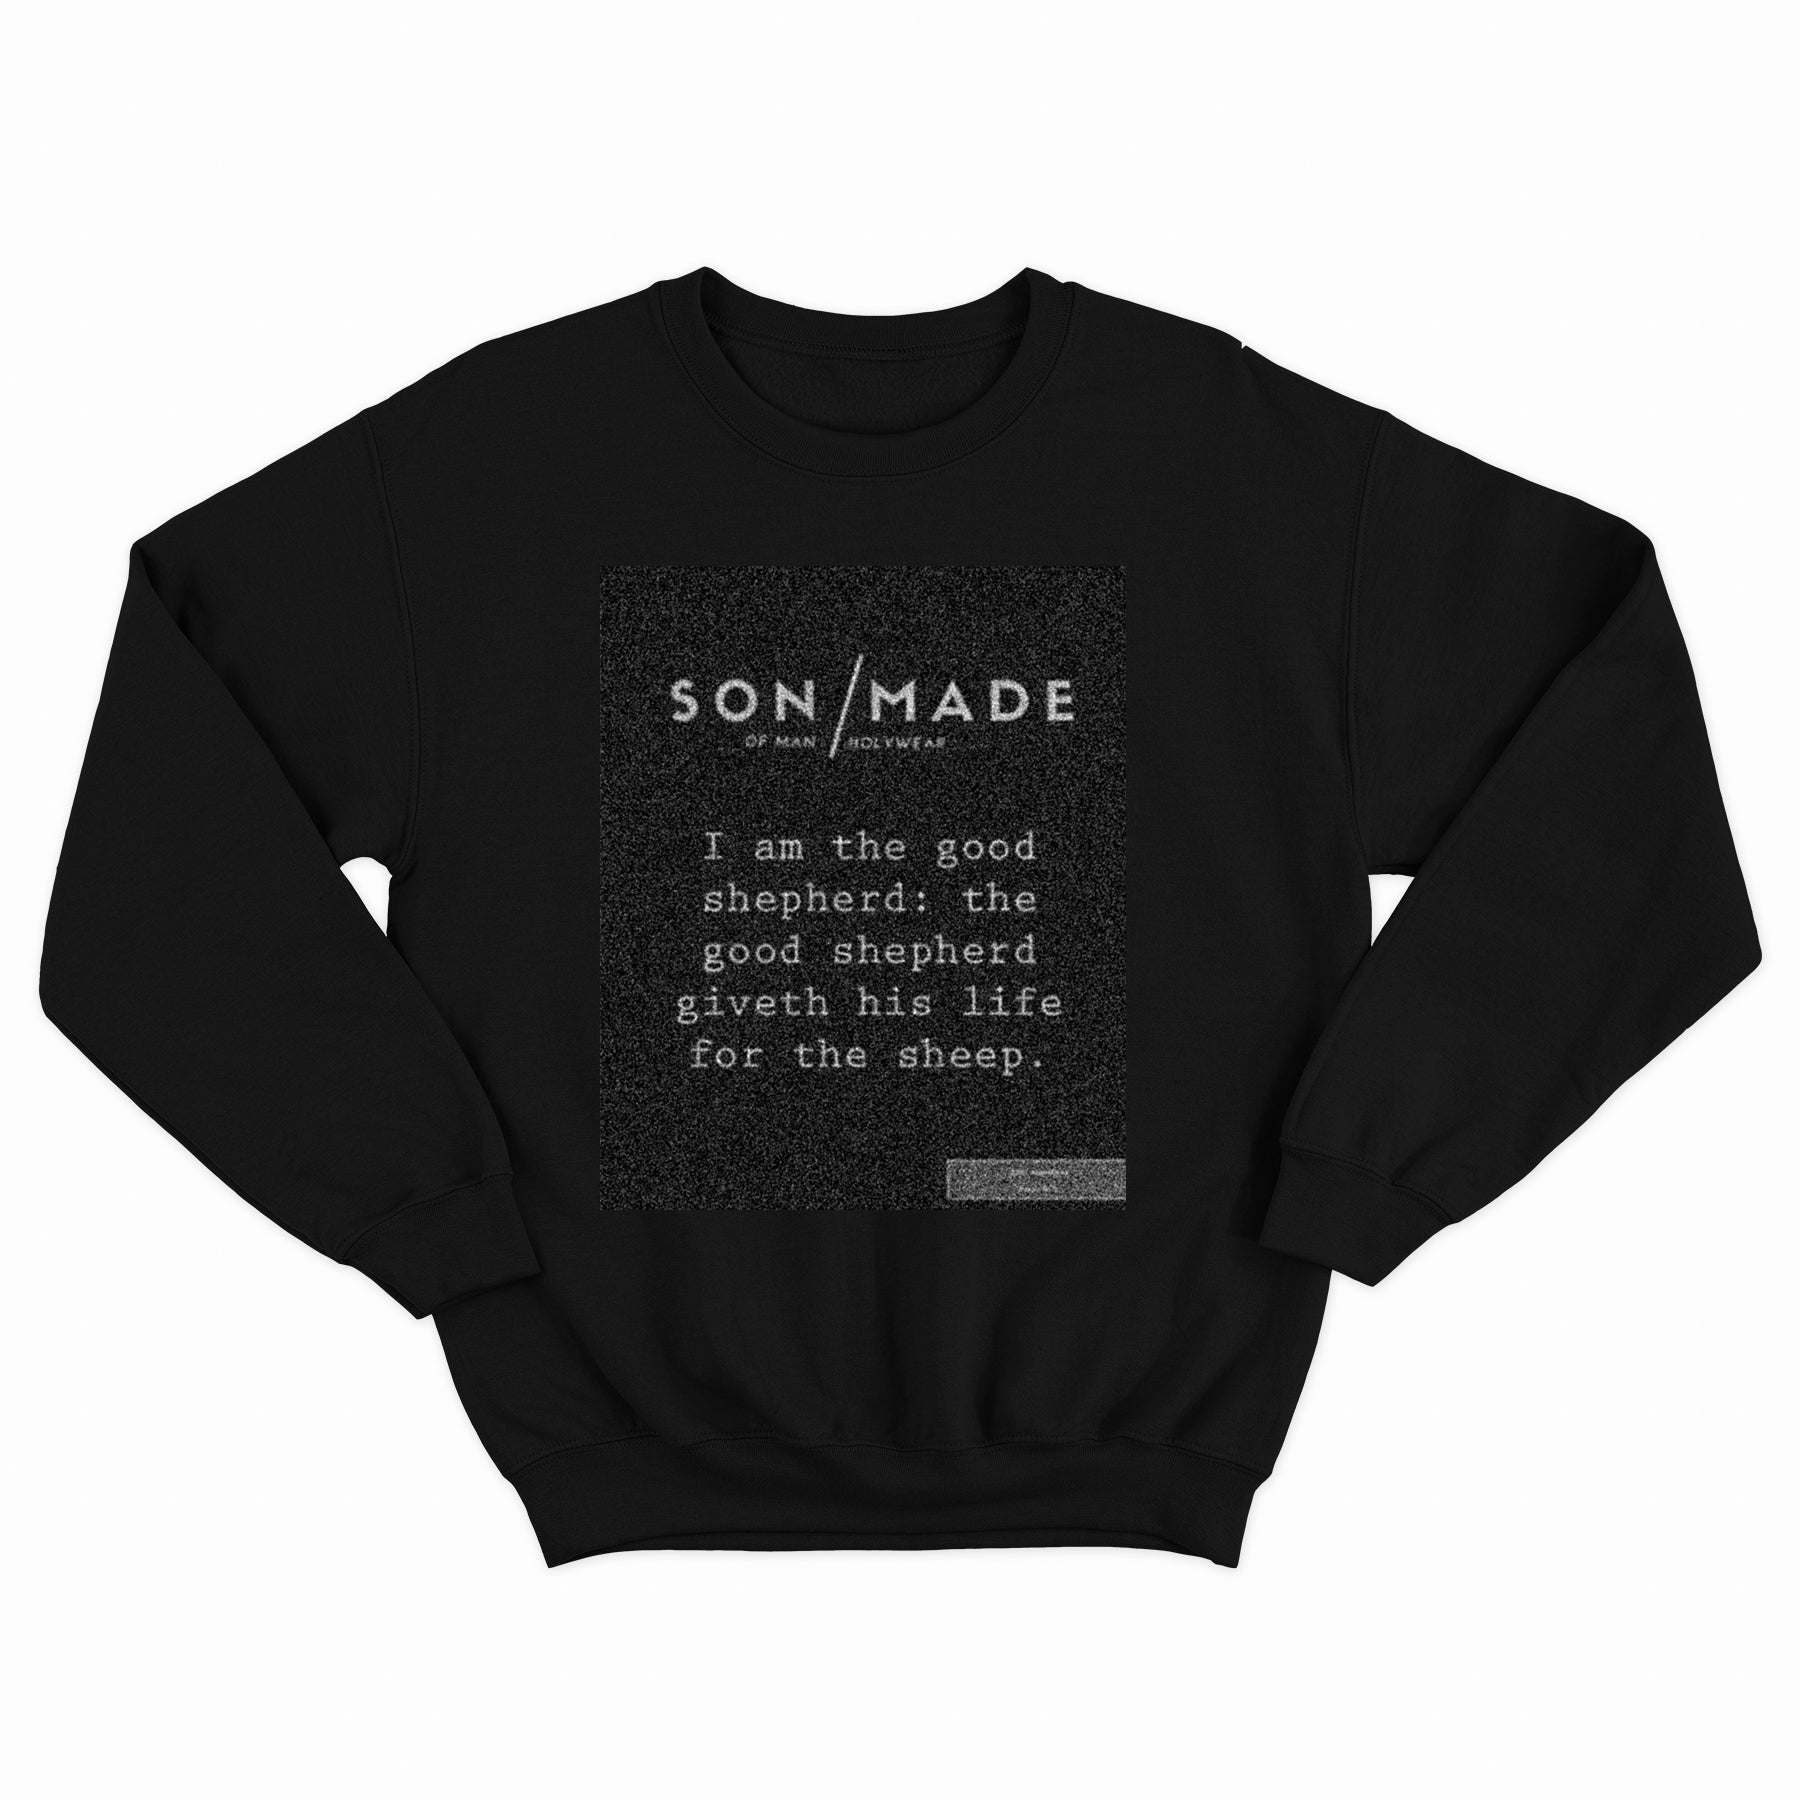 Son/Made Sweatshirt